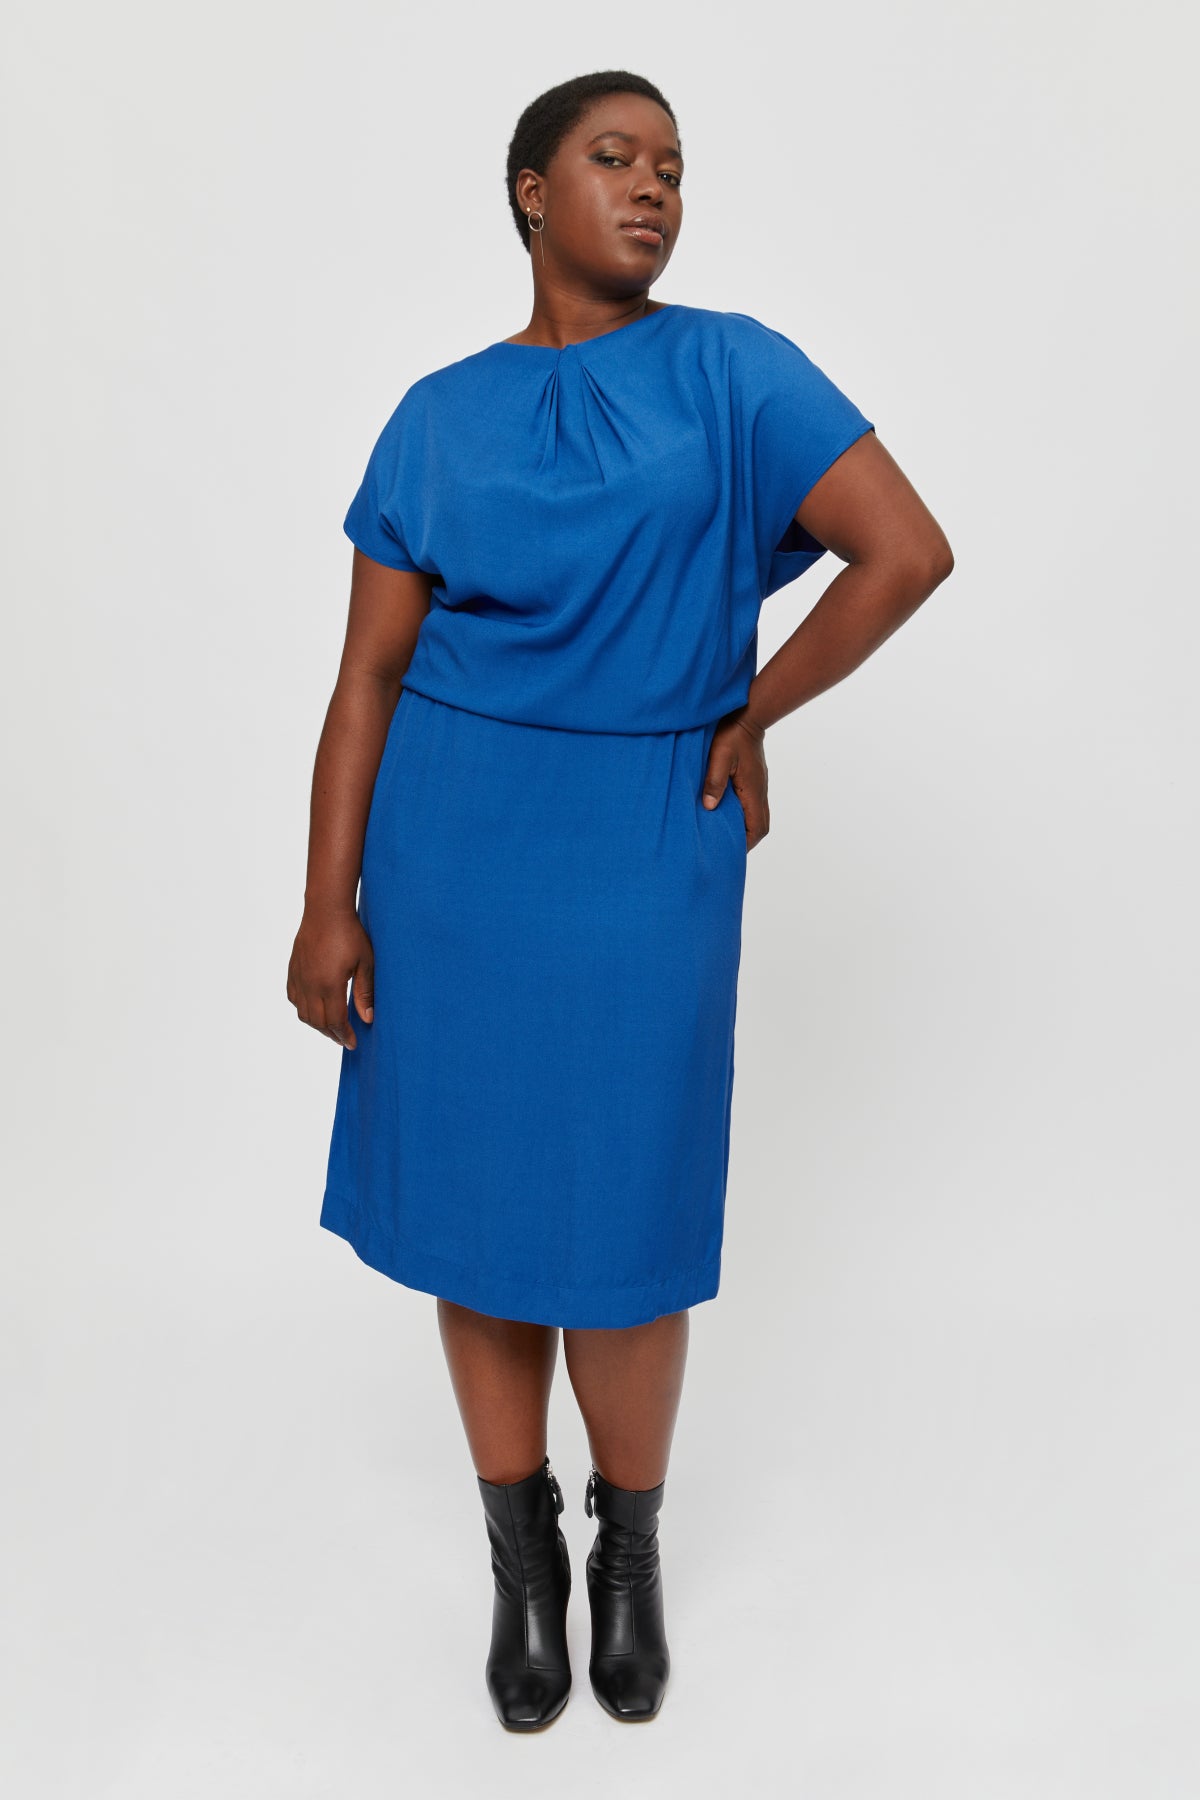 Blue Work Dress AMY for Women. Midi Pencil Skirt Dress · Elegant Office Dress with Pockets - AYANI